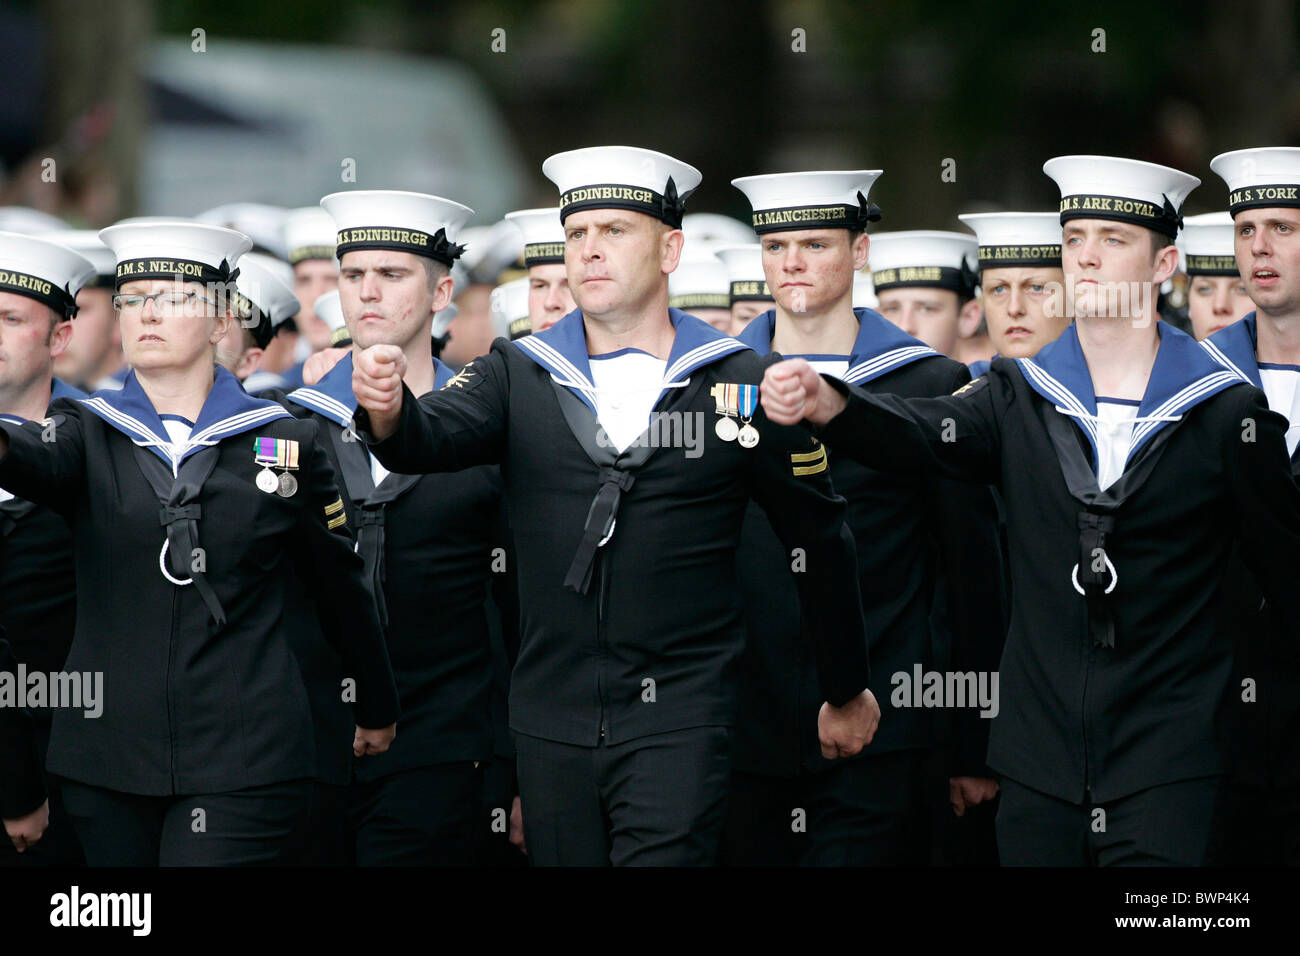 Royal Navy Sailor Uniforms